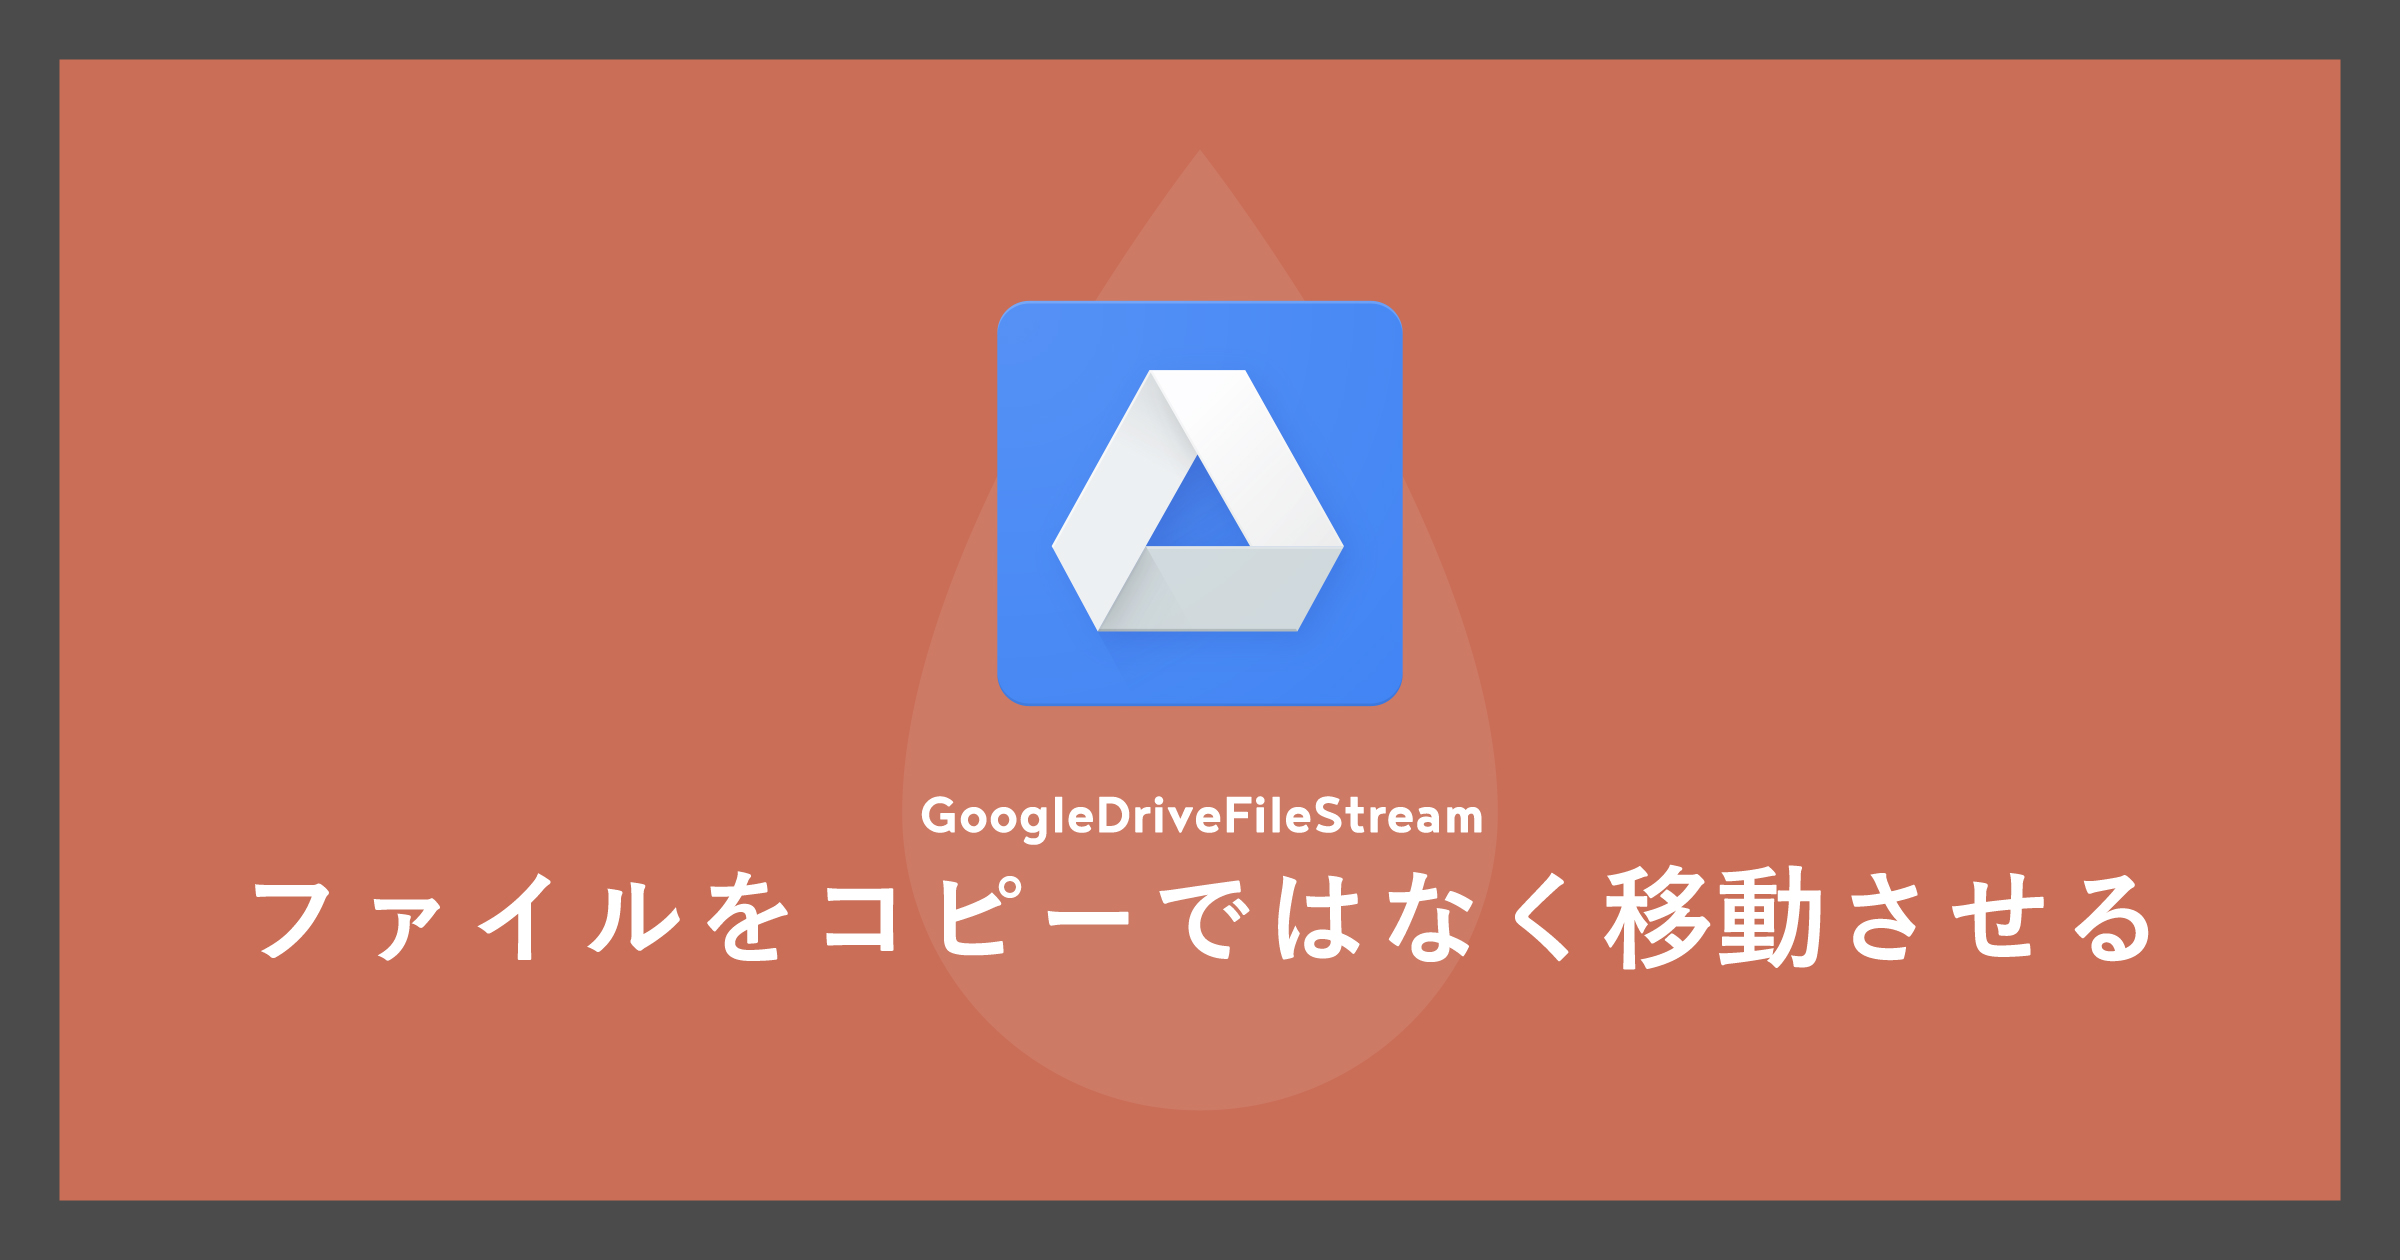 「[Mac]GoogleDriveFileStreamでファイルをコピーではなく移動させる」のアイキャッチ画像